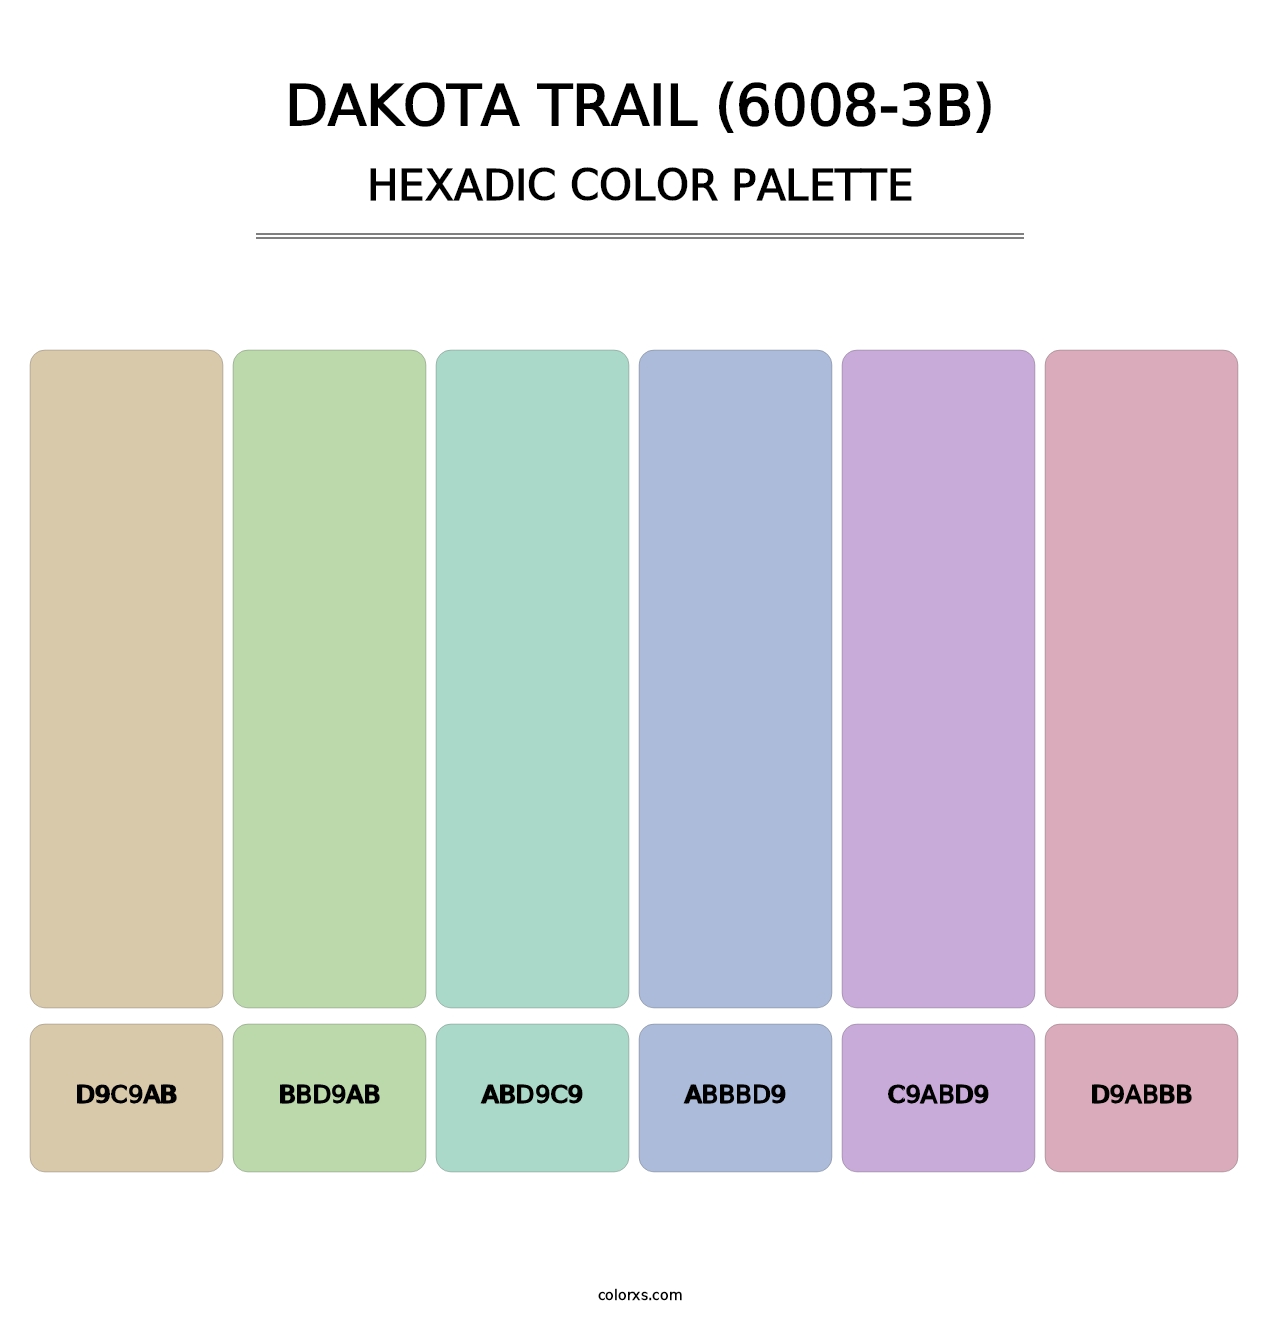 Dakota Trail (6008-3B) - Hexadic Color Palette